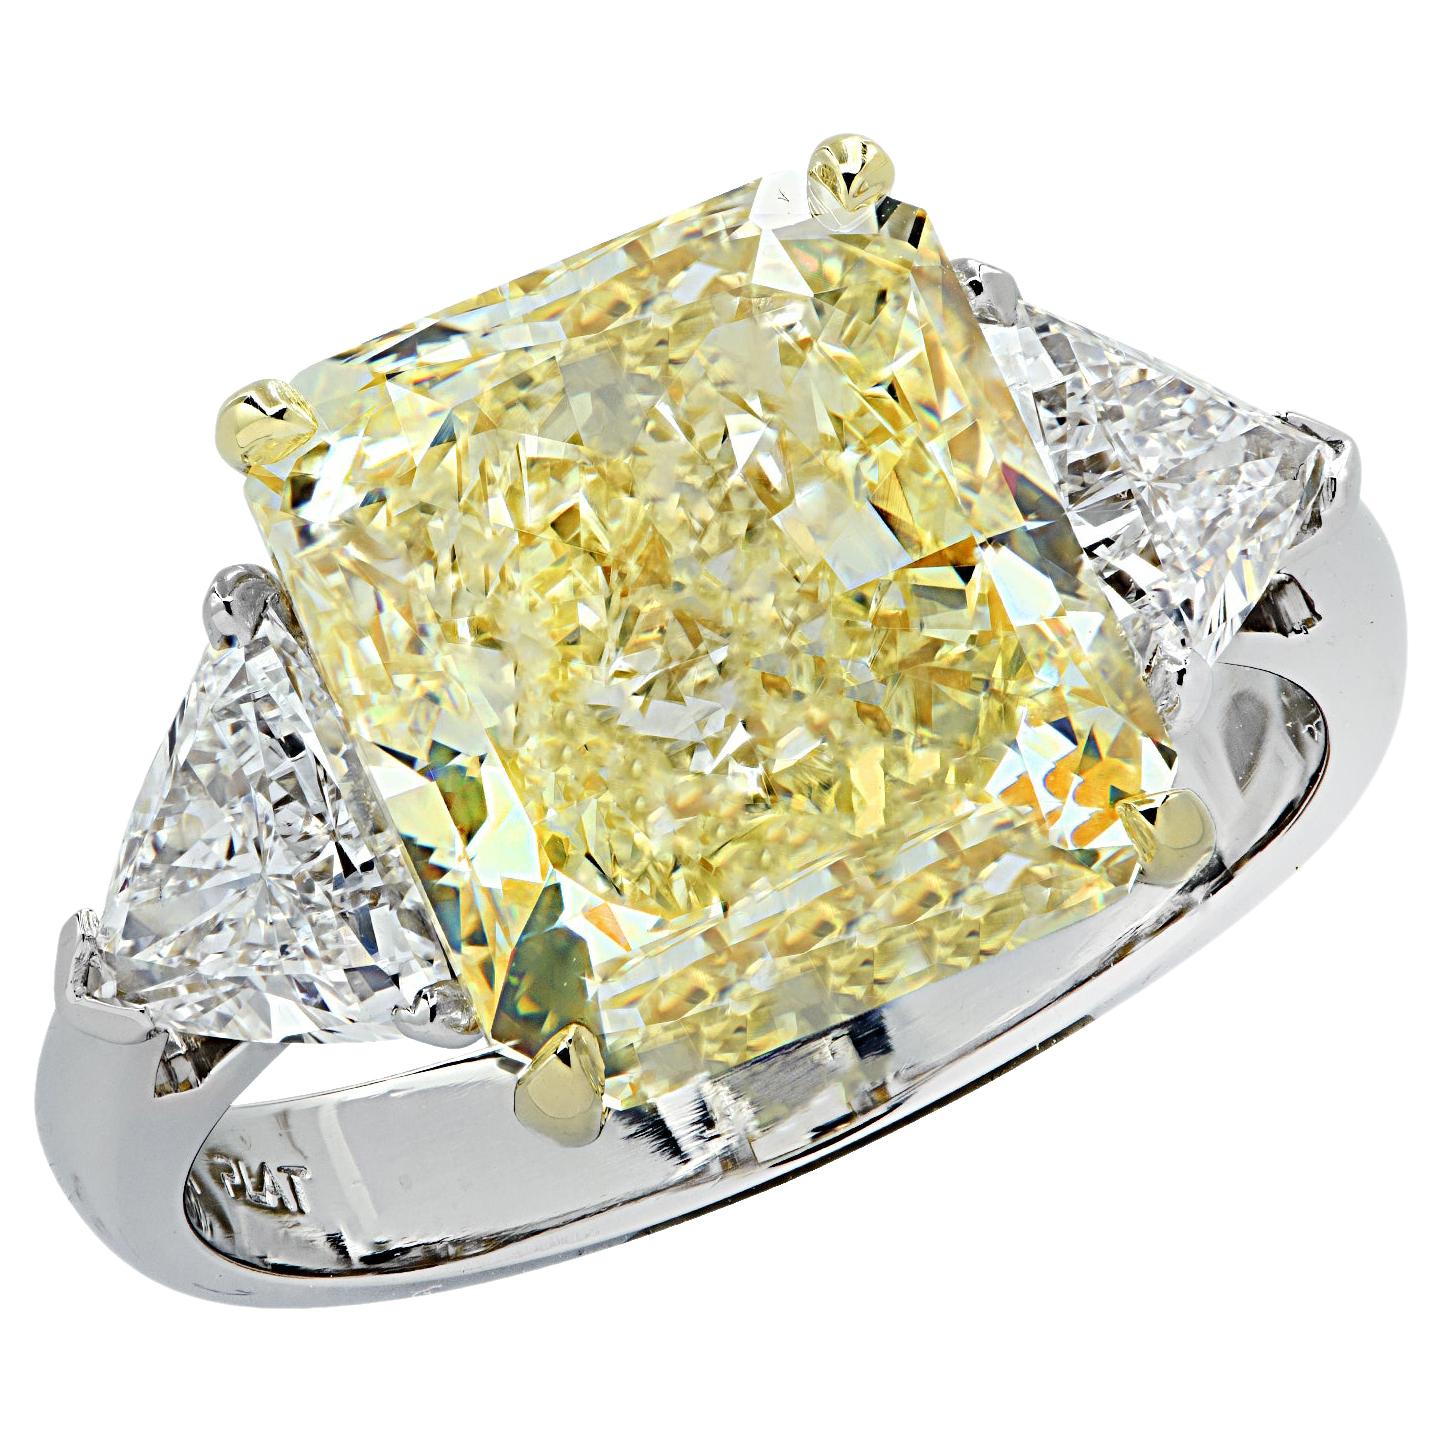 Vivid Diamonds GIA Certified 6.42 Carat Fancy Yellow Diamond Engagement Ring